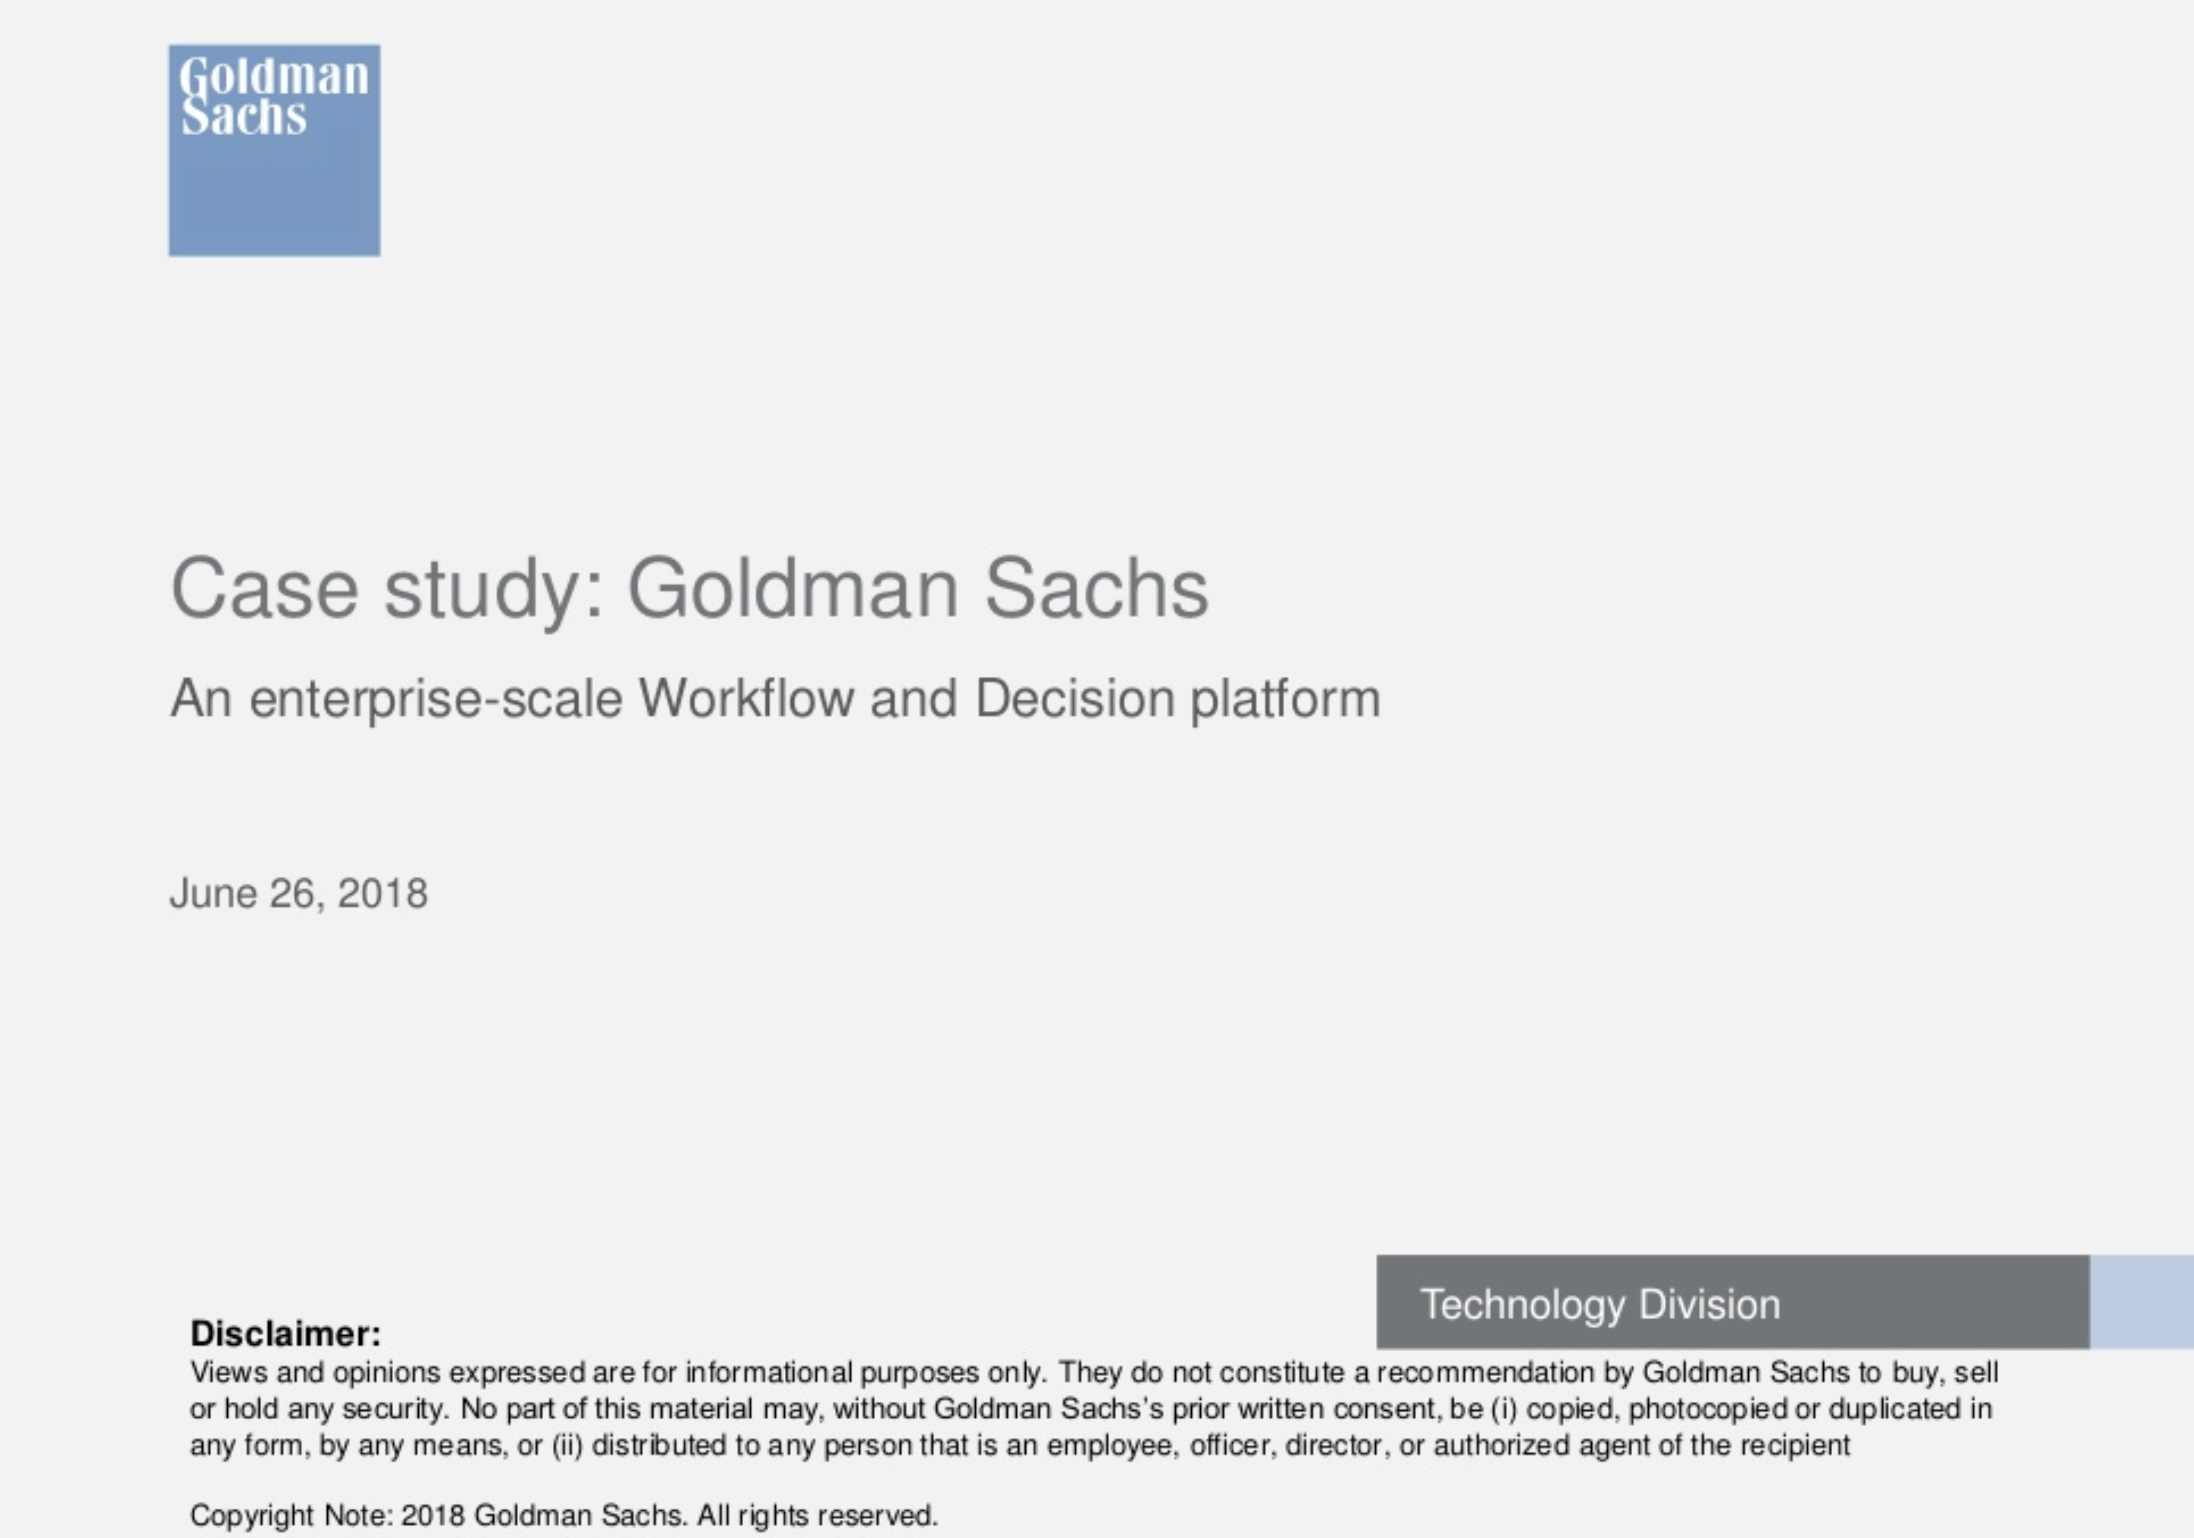 Watch the Goldman Sachs workflow platform presentation